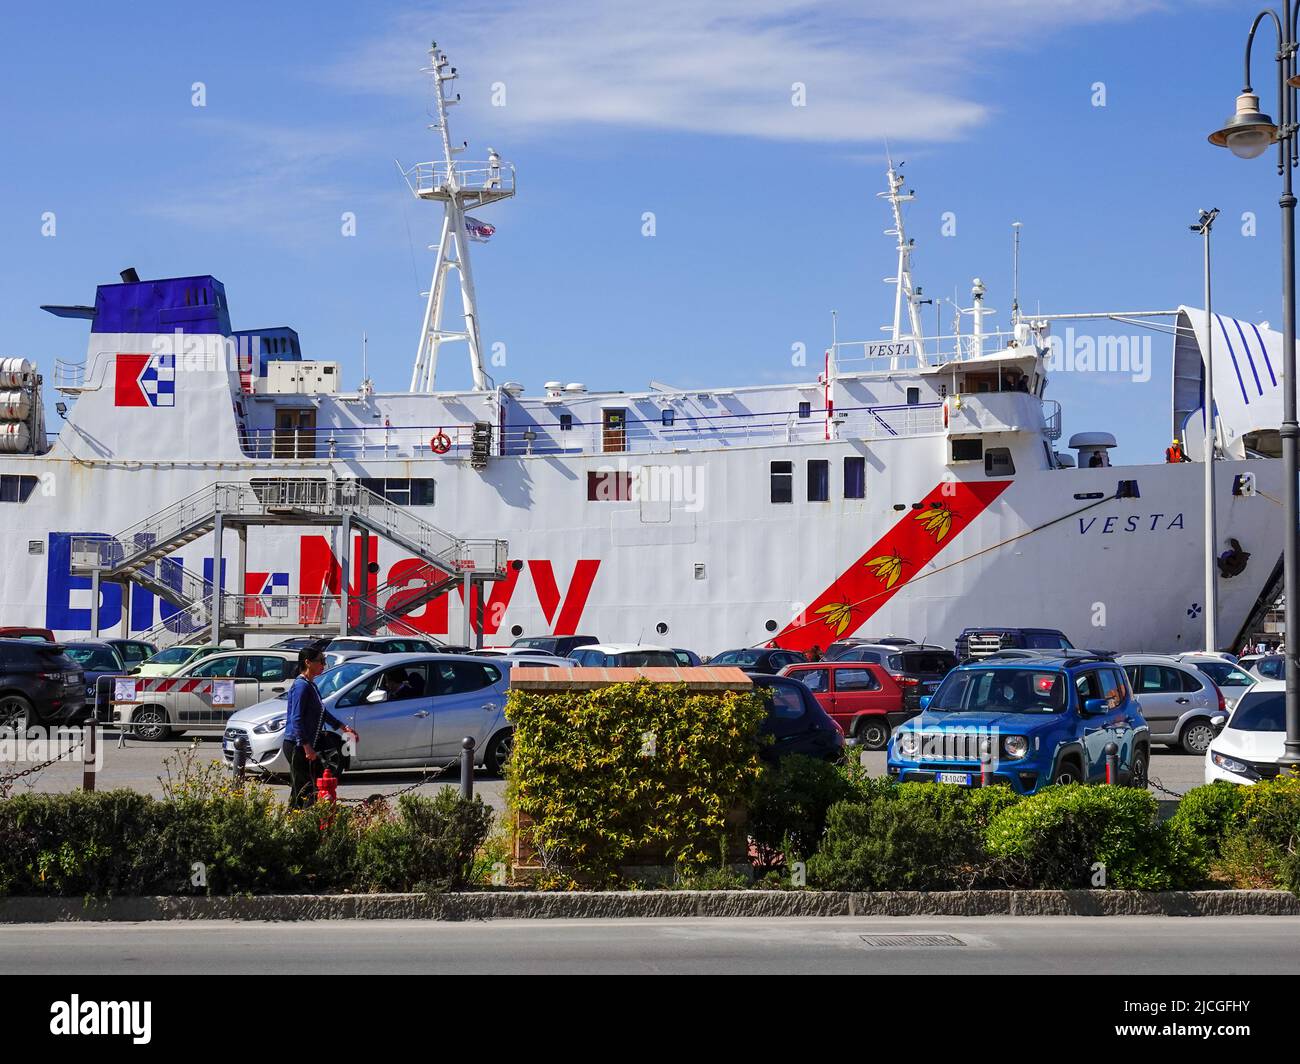 Blu-Navy ferry Vesta, docked in the port, Portoferraio, Island of Elba,  Italy Stock Photo - Alamy